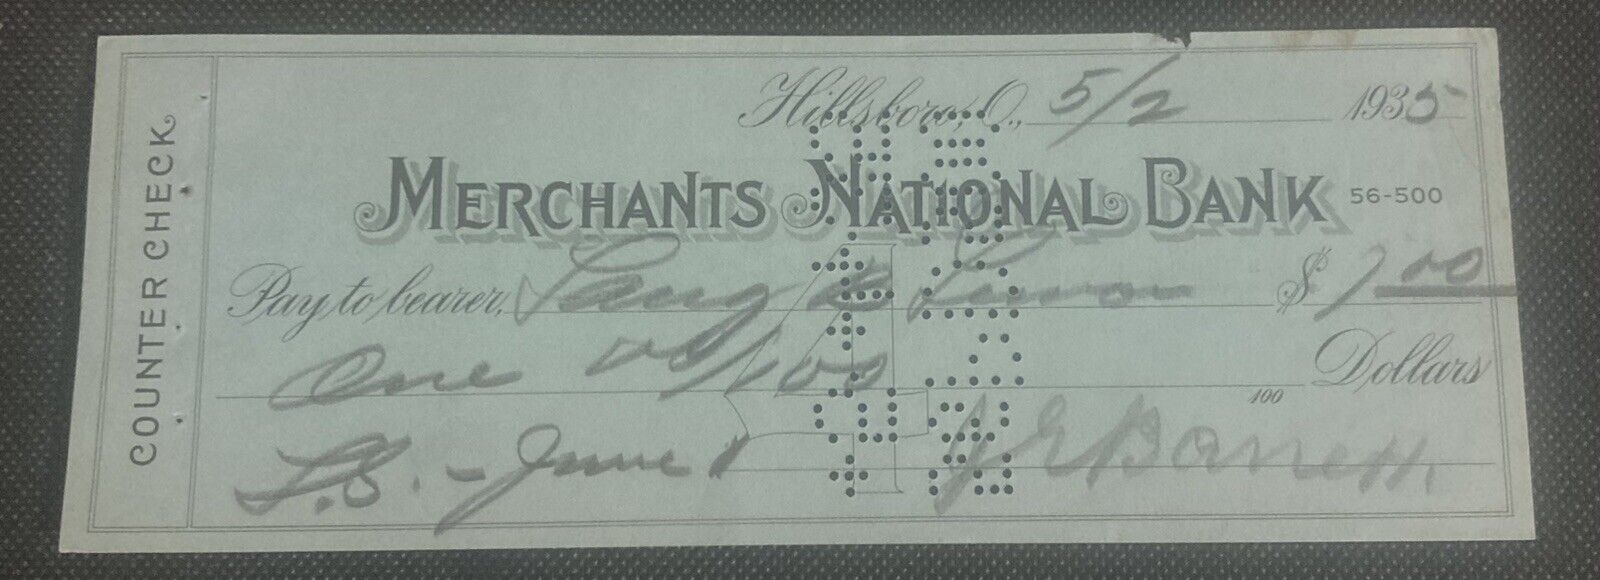 Merchants National Bank, Hillsboro, OH 1935 Counter Check